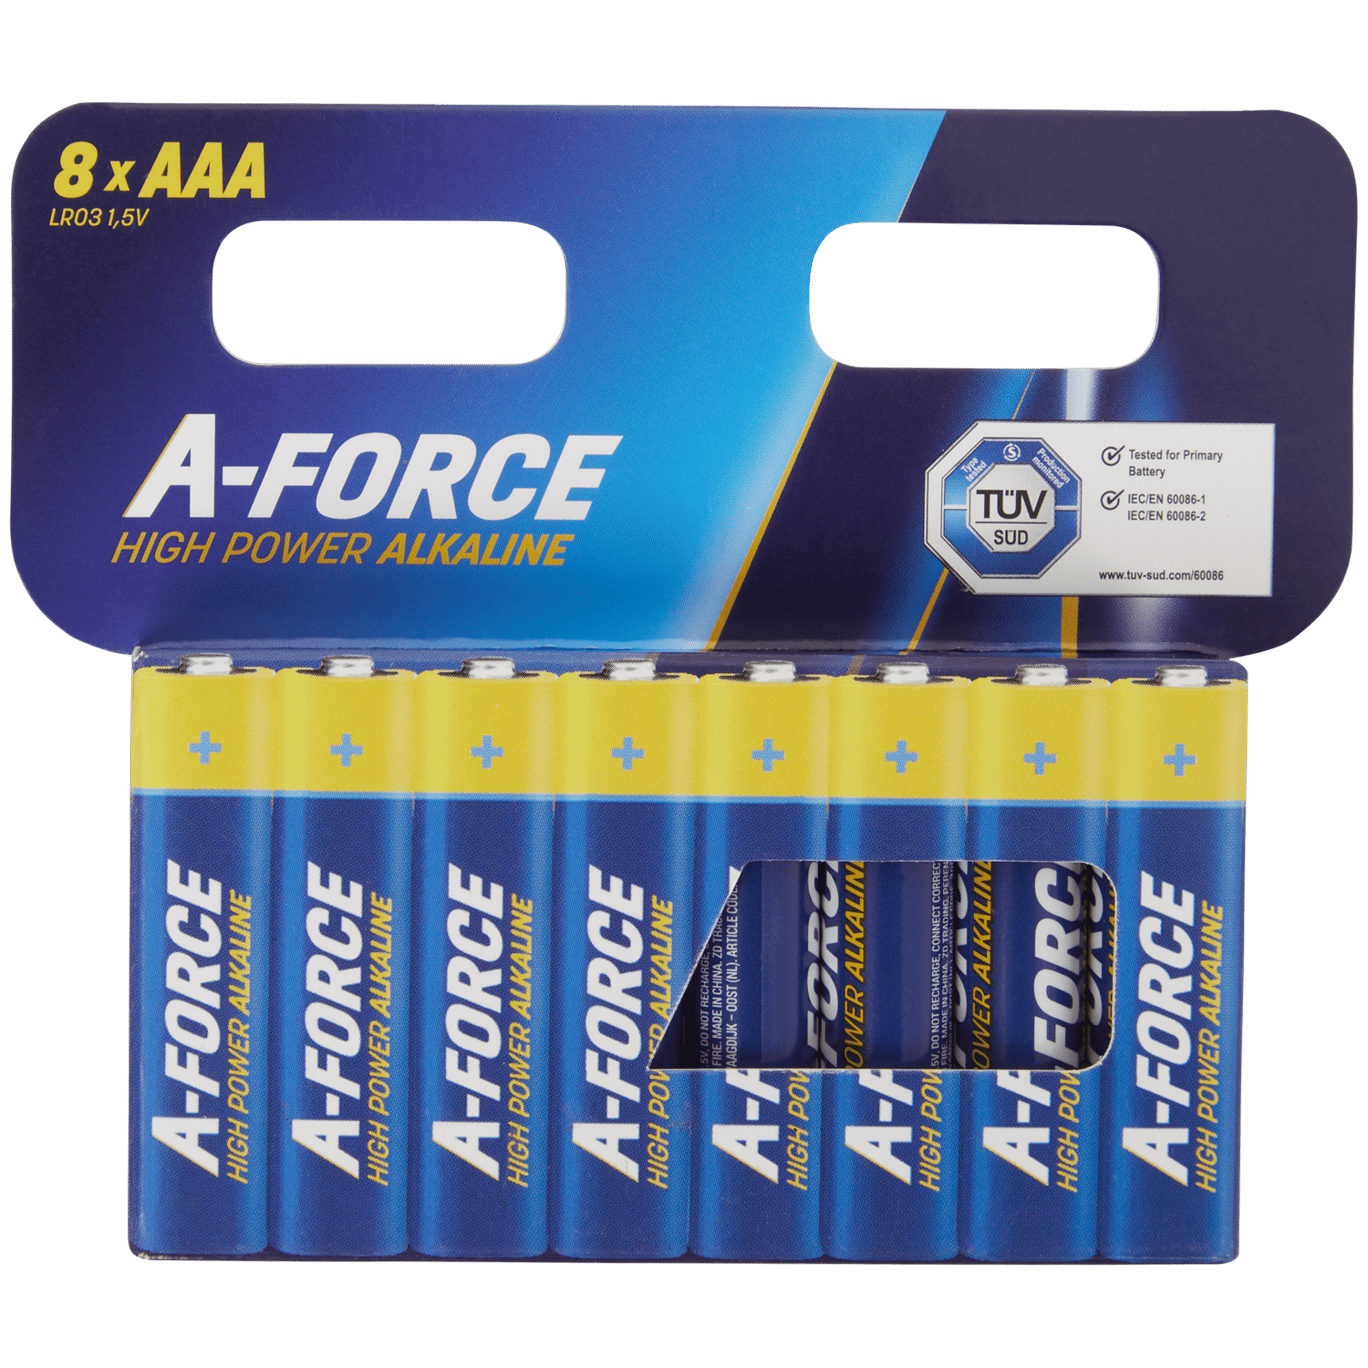 Jong Ontvangende machine Manga A-Force AAA batterijen | Action.com